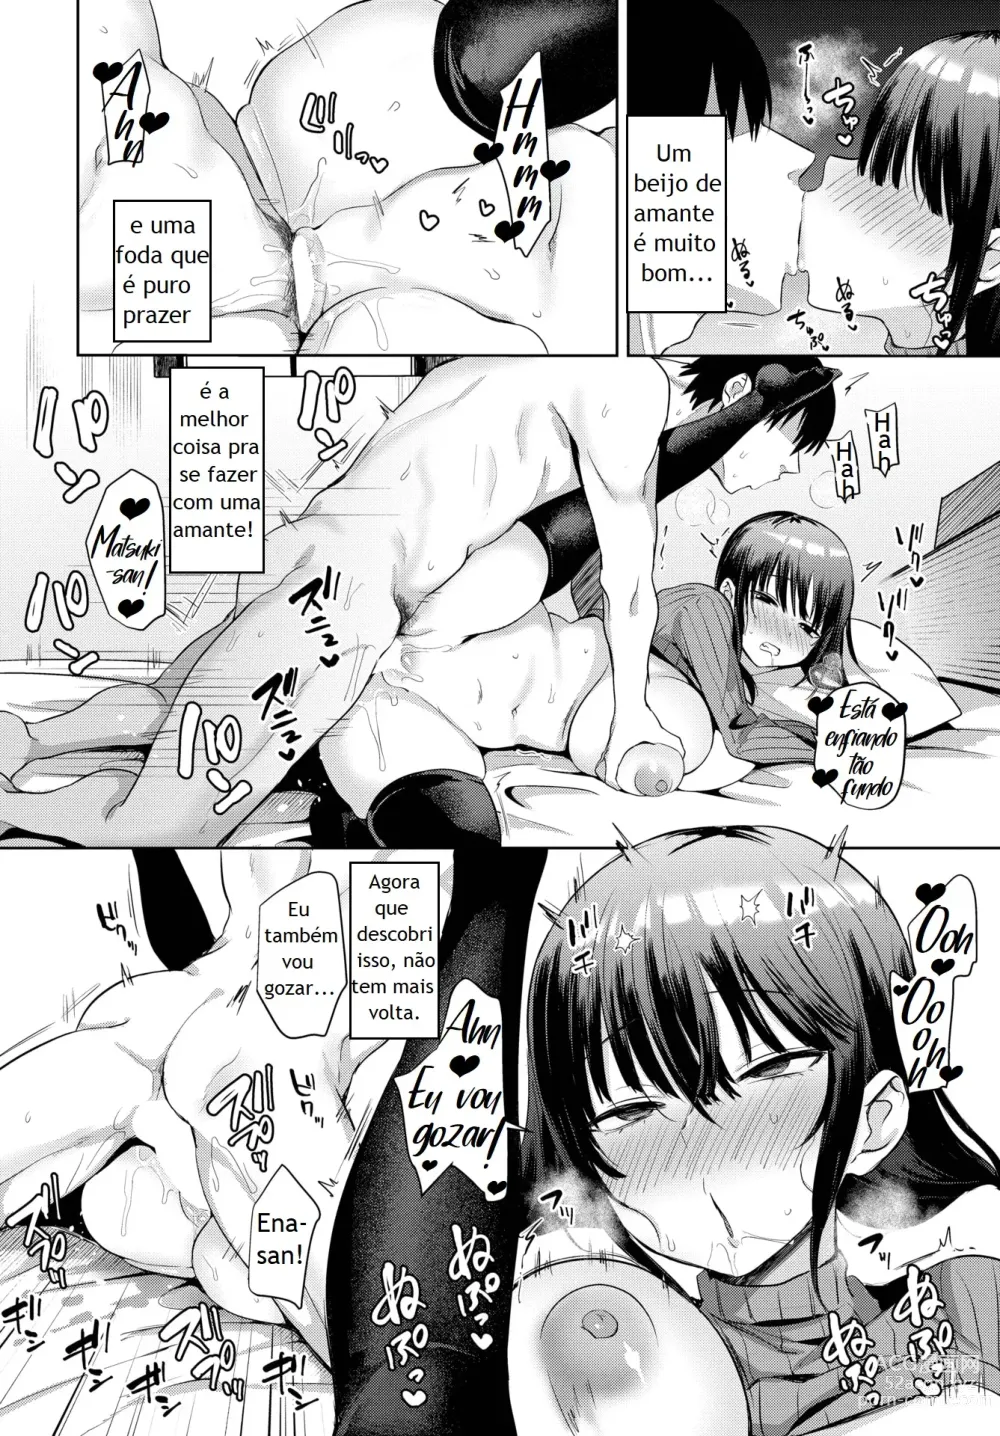 Page 18 of manga Furaretori - Its mine.